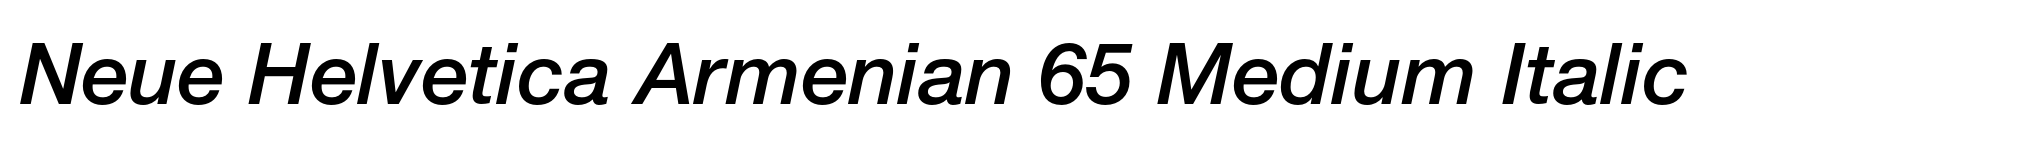 Neue Helvetica Armenian 65 Medium Italic image